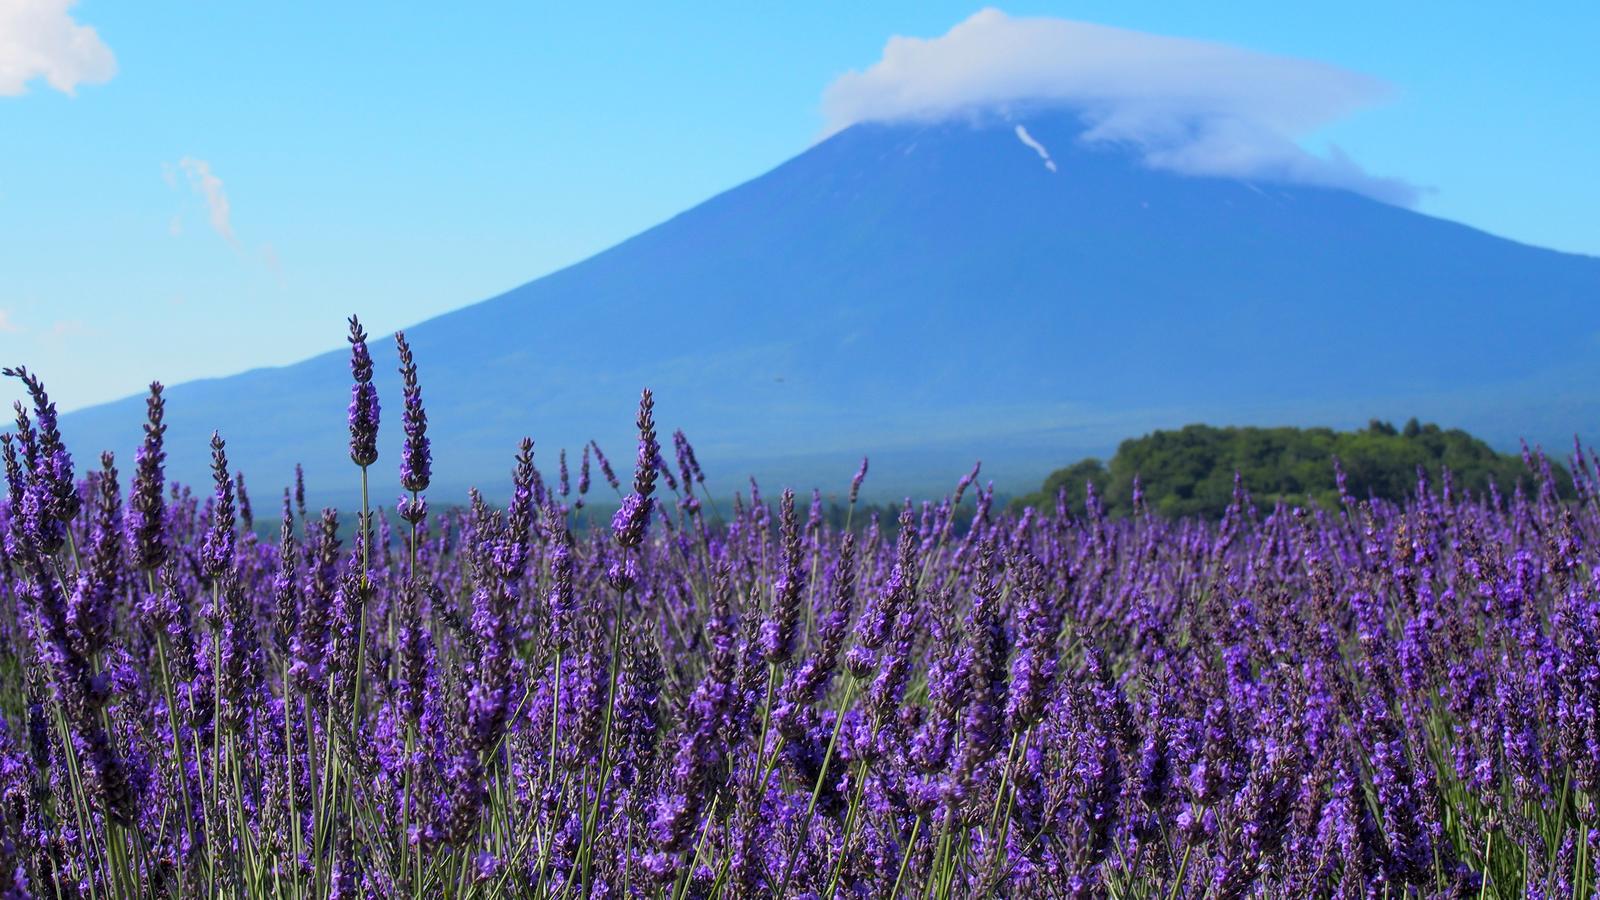 Discover Japan & Hike Mt Fuji